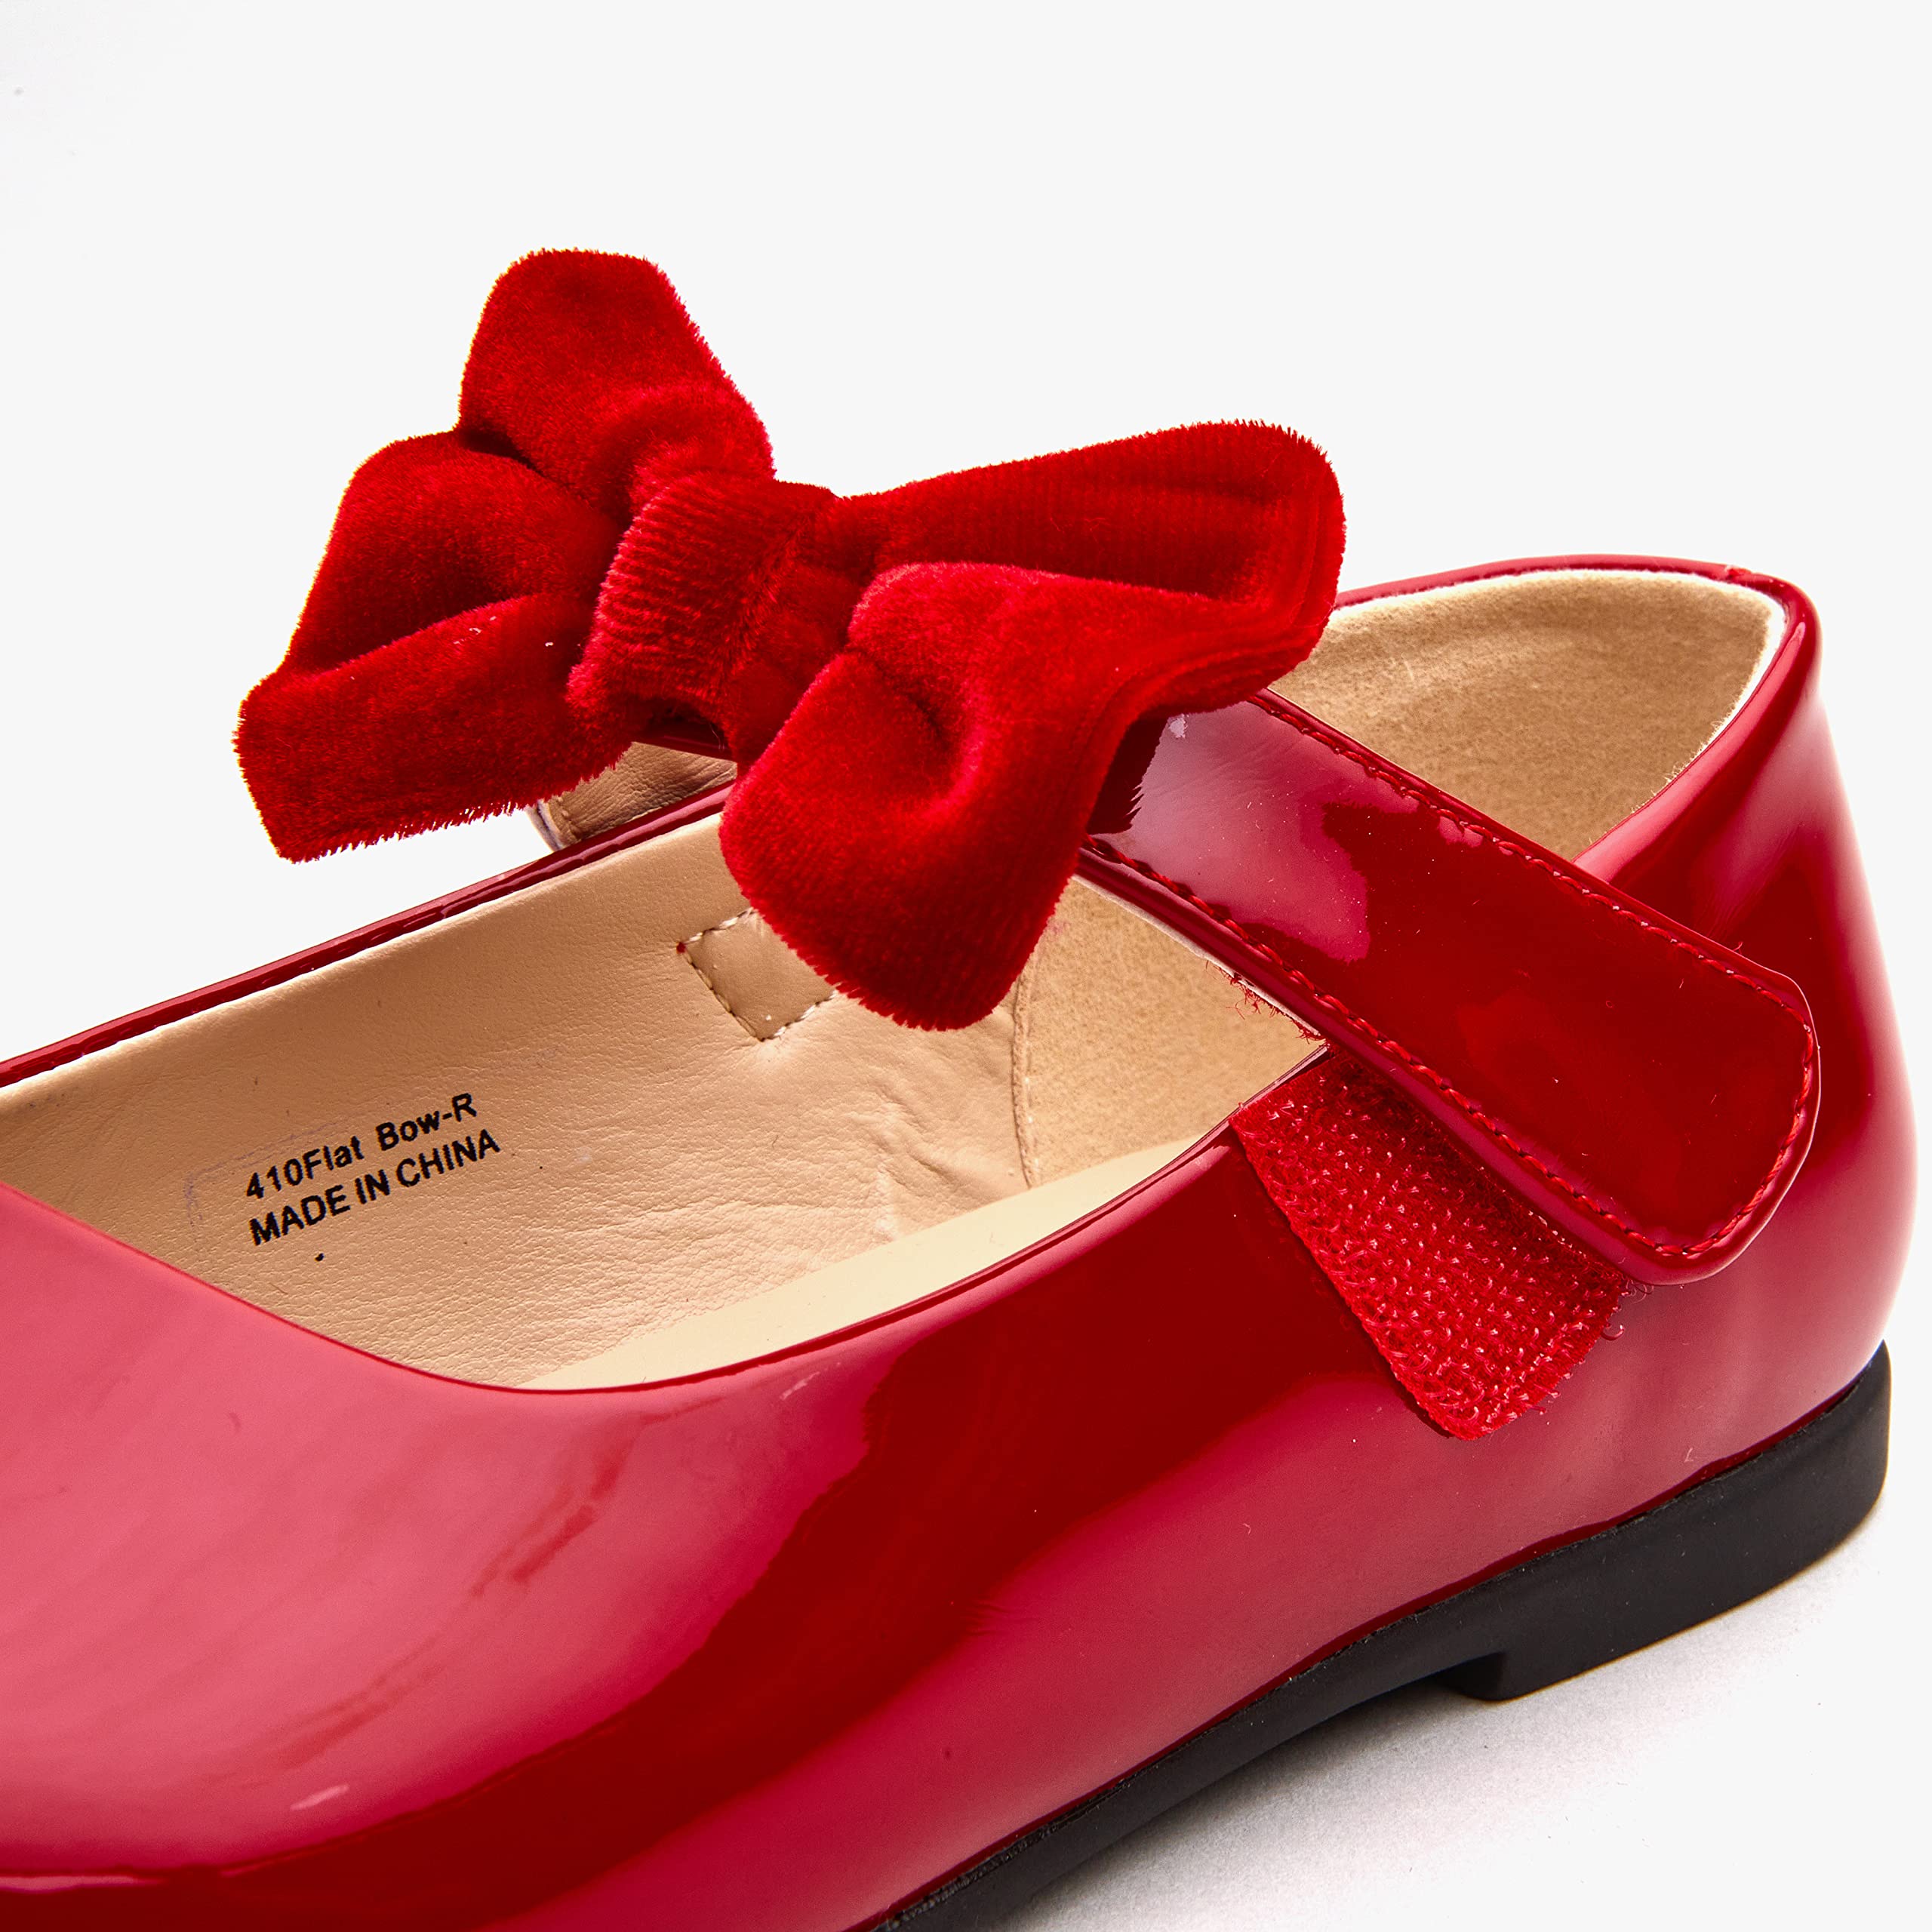 Weestep Toddler/Little Kid Girl Dress Ballet Flat Mary Jane Ballerina Shoe